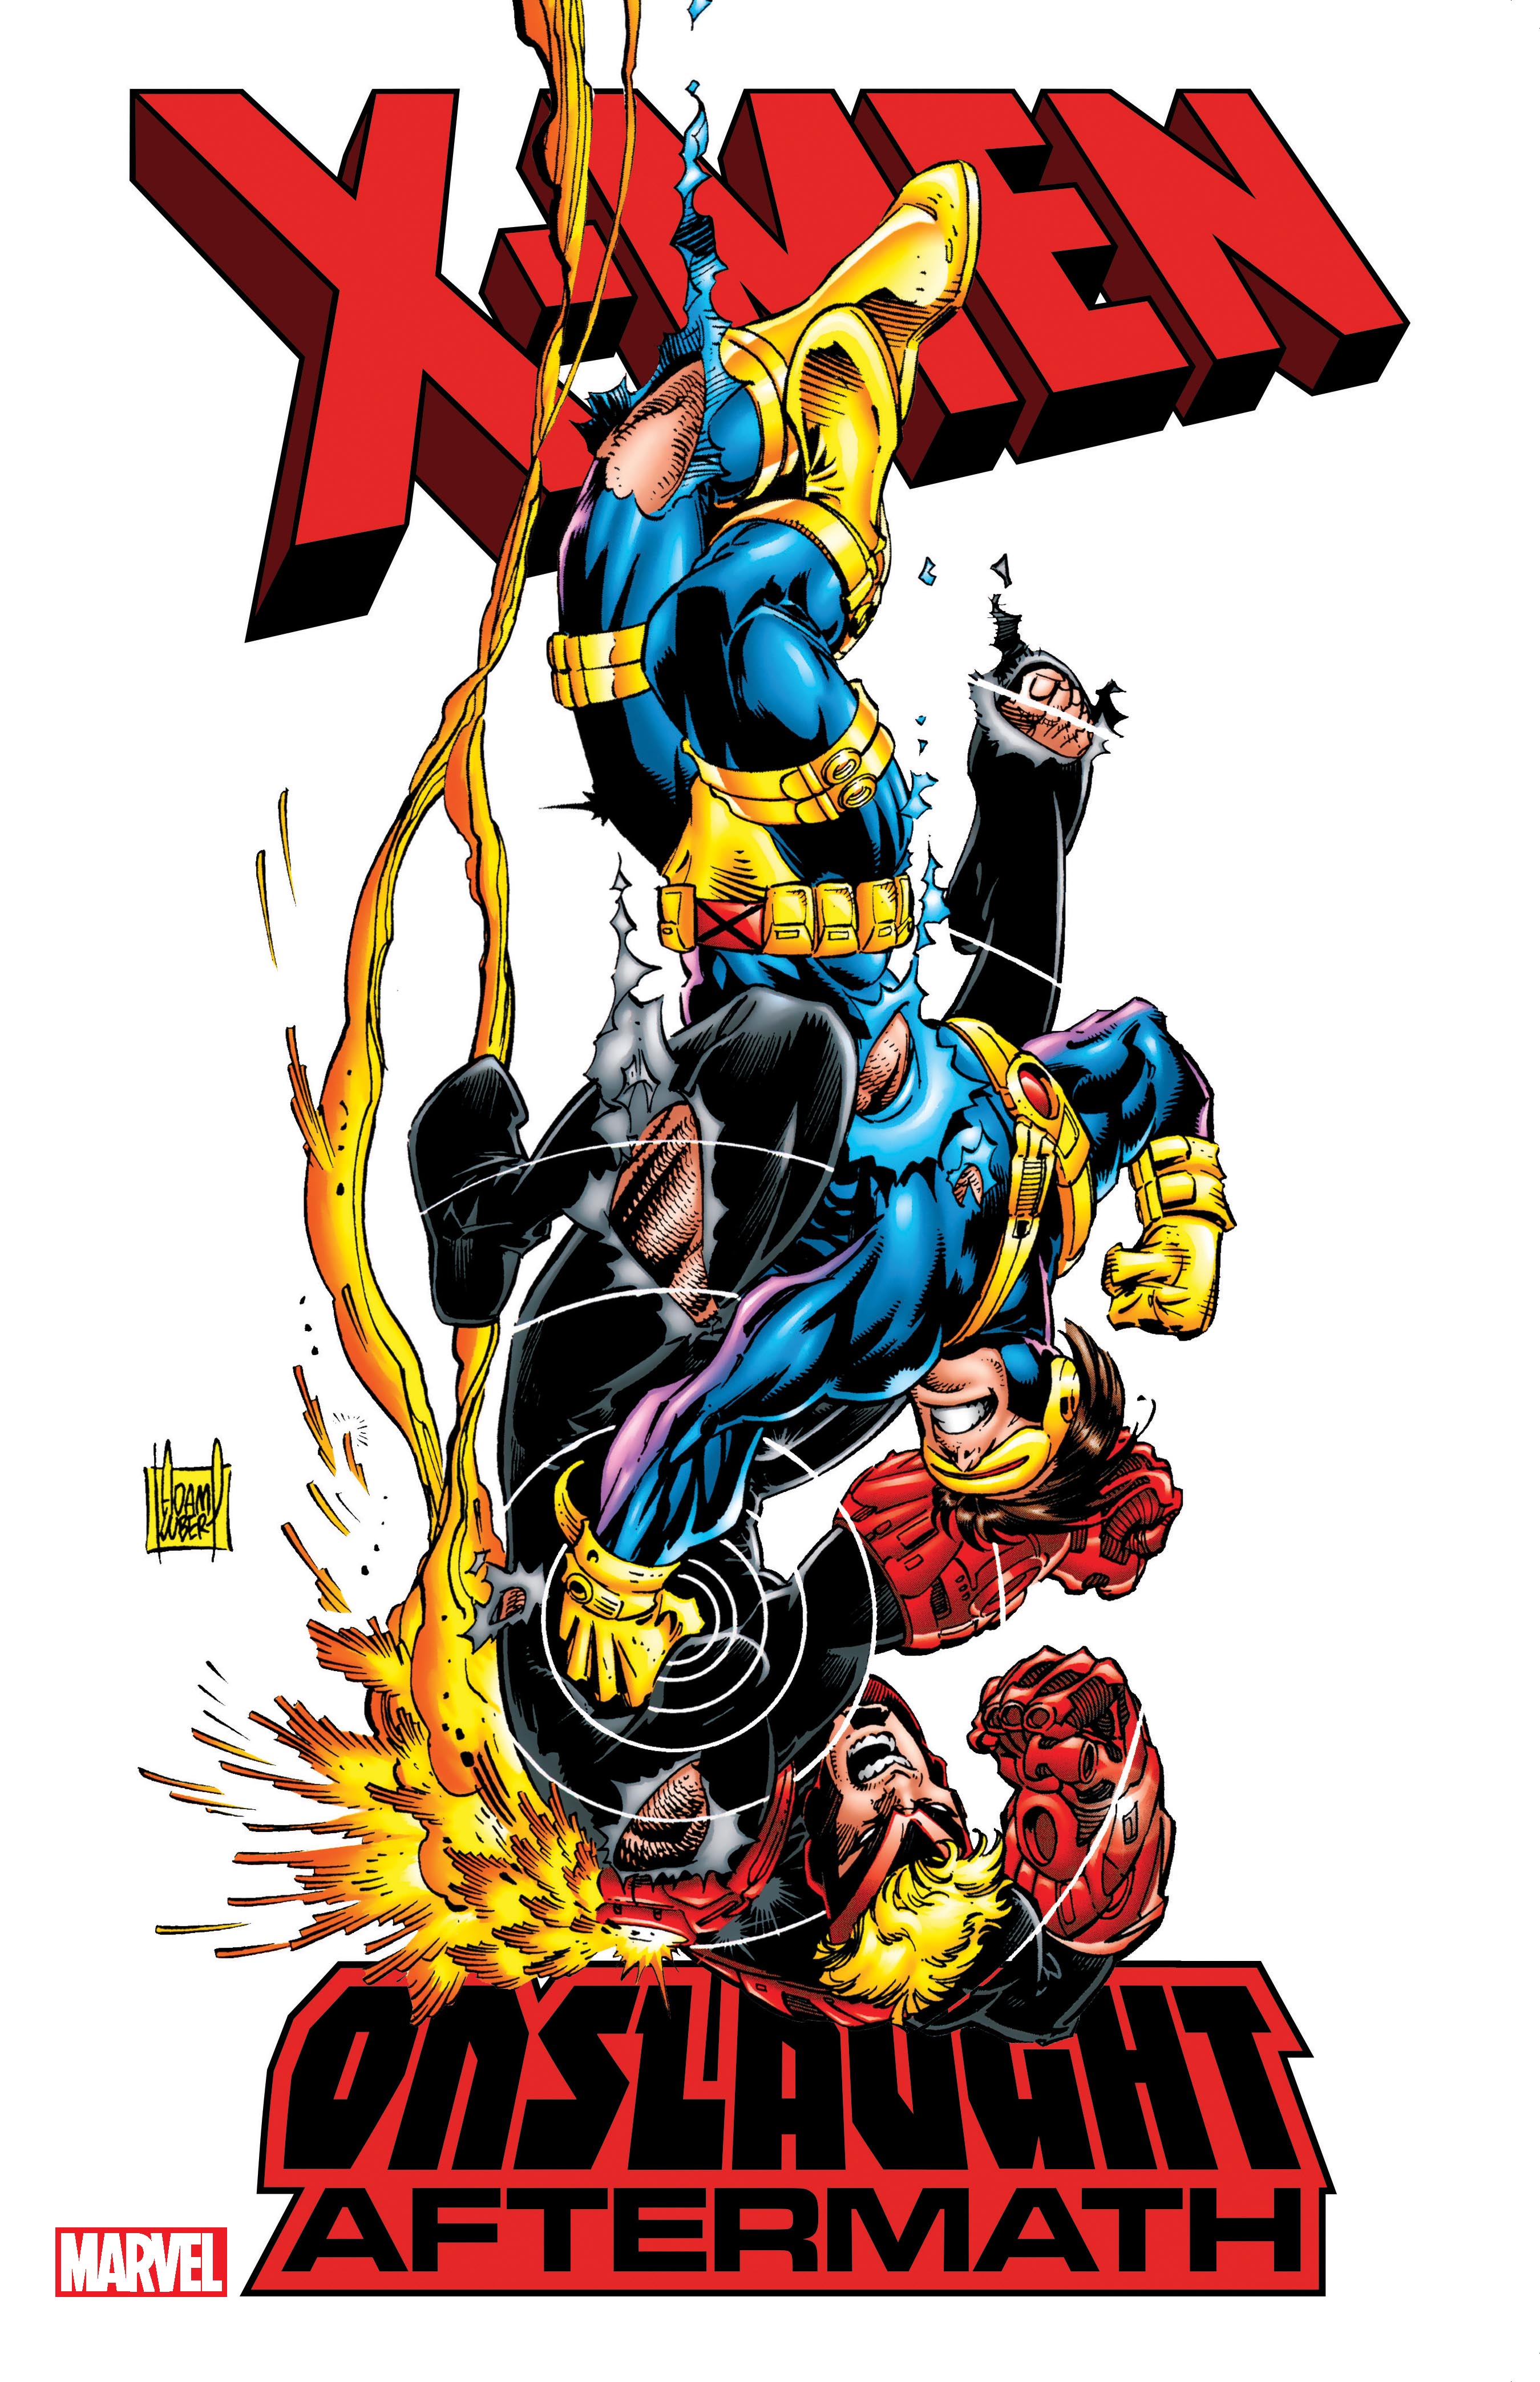 X-Men: Onslaught Aftermath (Trade Paperback)